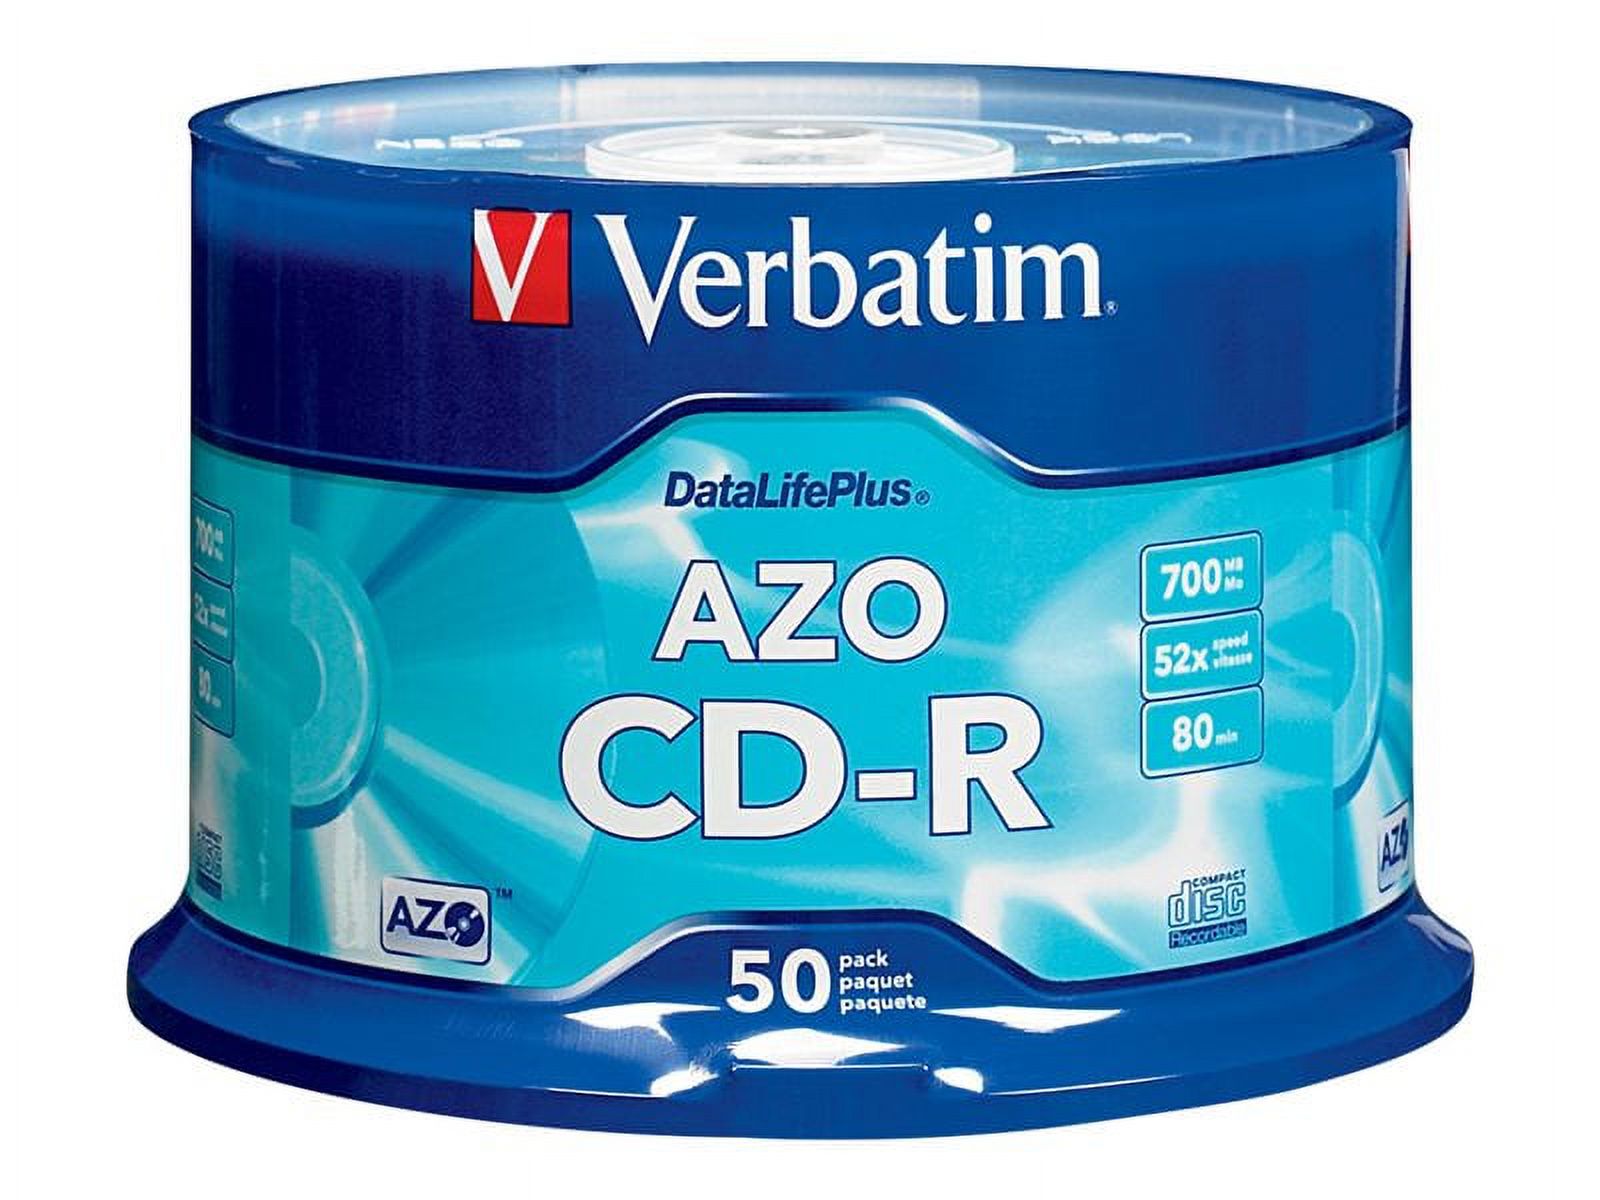 VERBATIM CD-R DL+ BRAND 50pk 700MB/52X SPIN-SLVR - image 1 of 1